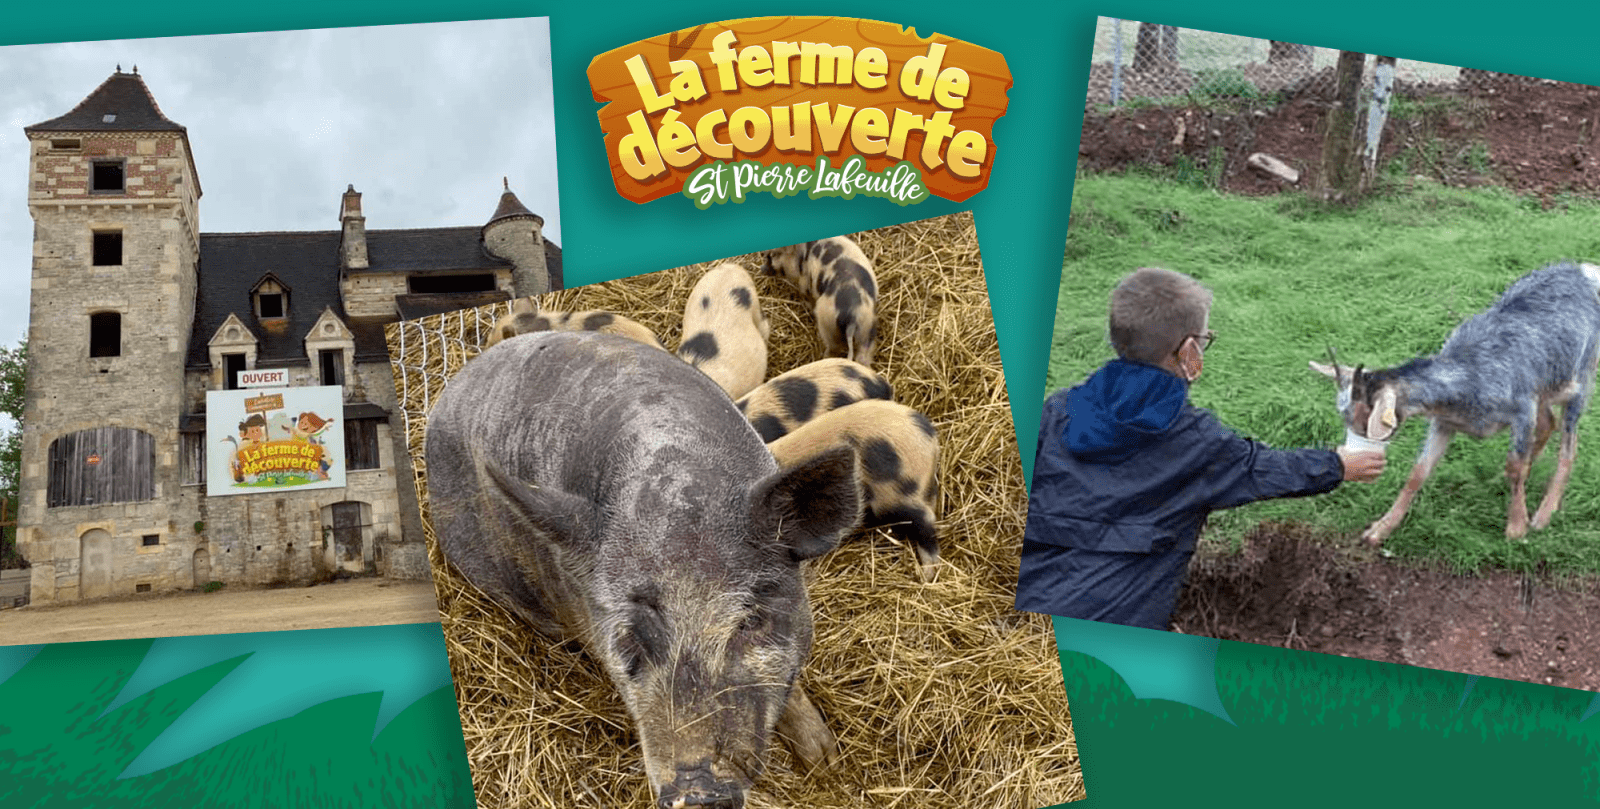 Los animales de la granja de descubrimiento de St Pierre Lafeuille